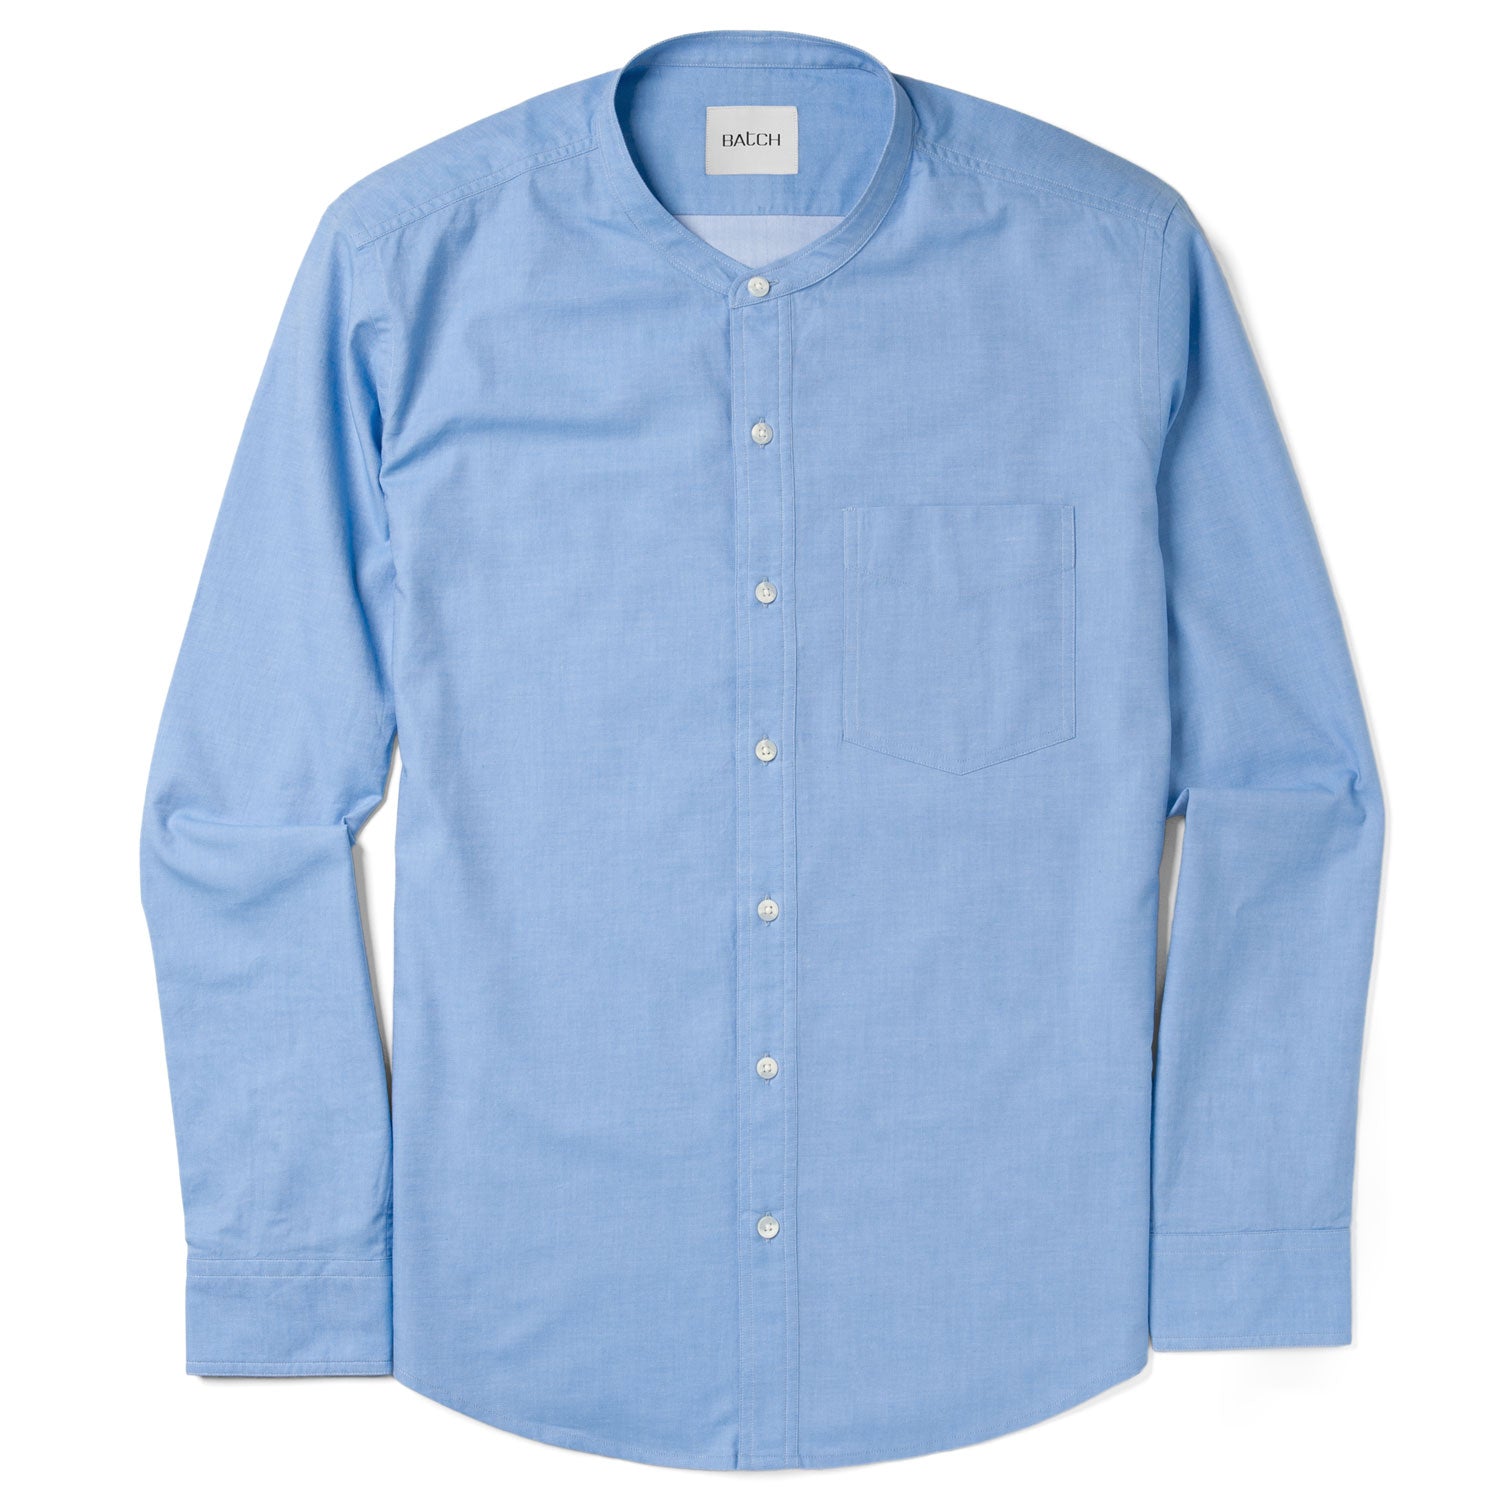 Essential Band Collar 1 Pocket Button Down Shirt - Pacific Blue Cotton Denim